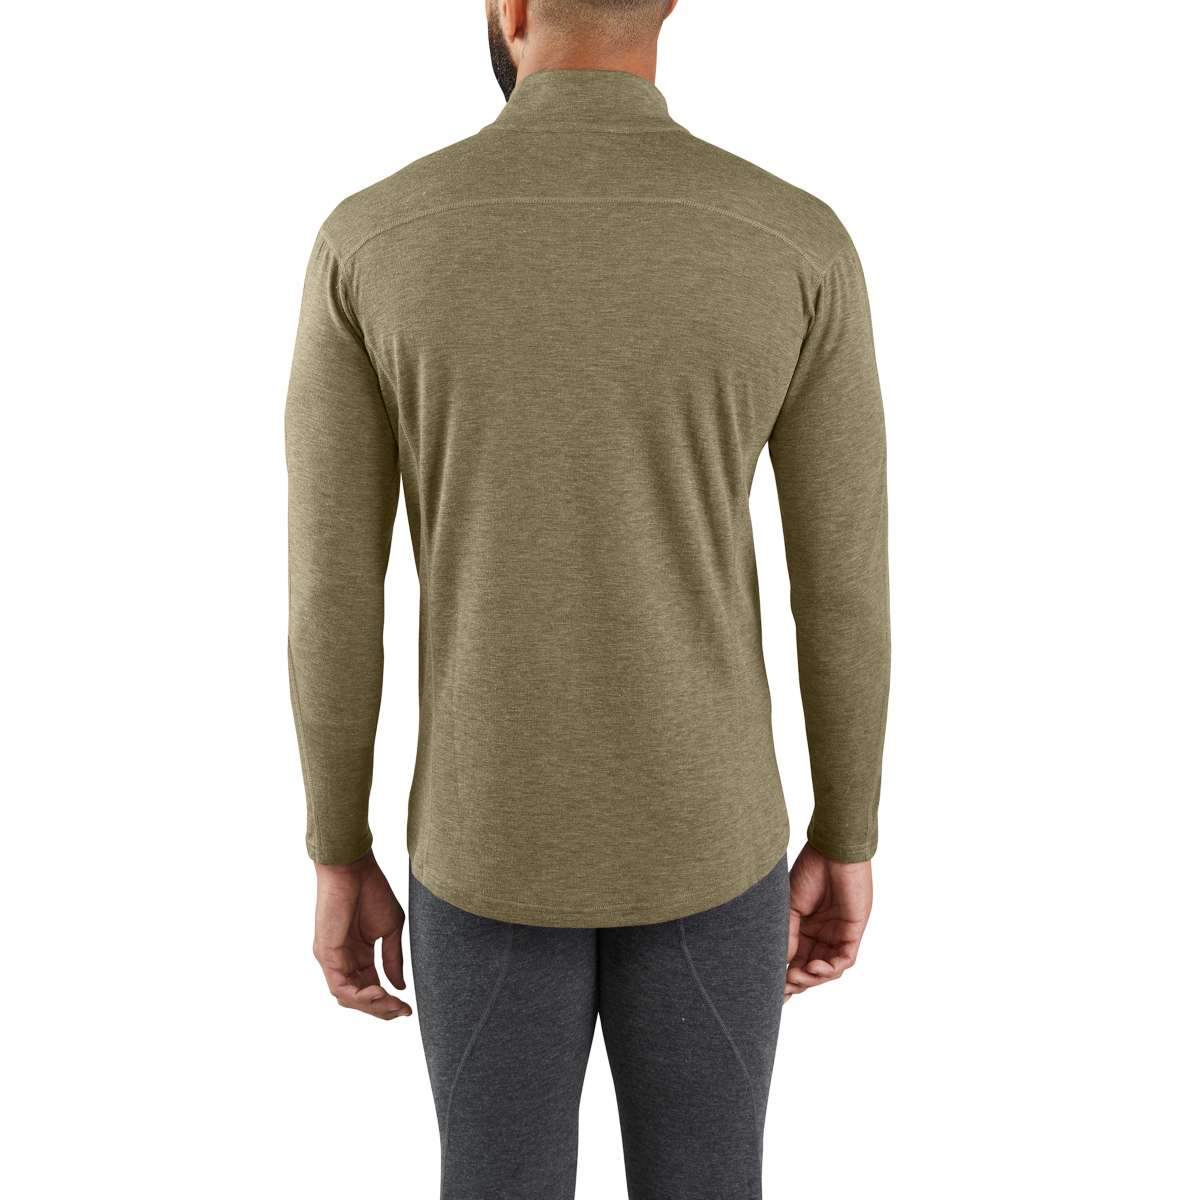 MBL120 - Carhartt Men's FORCE® Heavyweight Synthetic-Wool Blend Base Layer Quarter-Zip Pocket Top